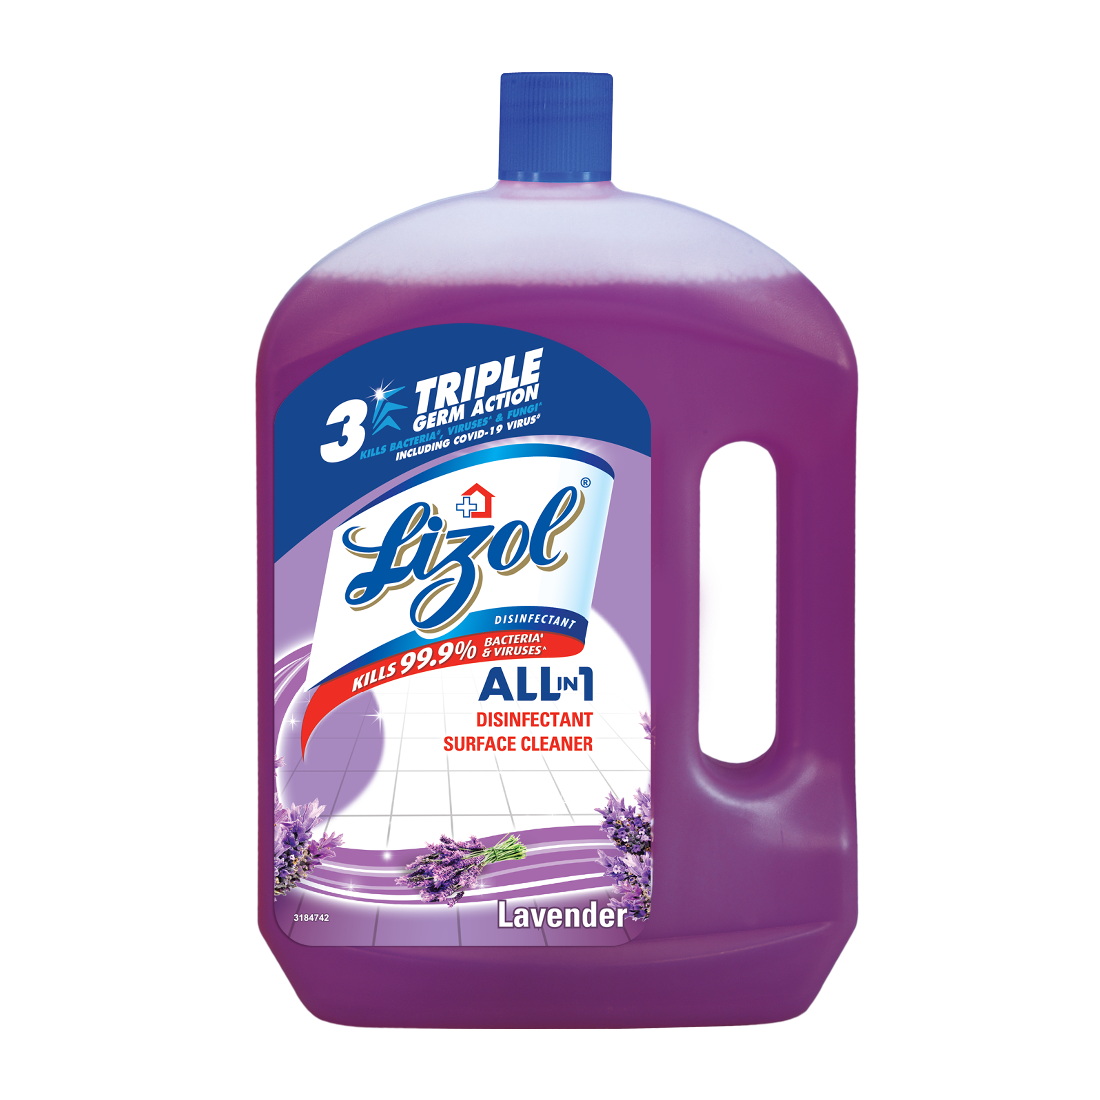 Lizol Disinfectant Surface Cleaner, Lavender, 2 L